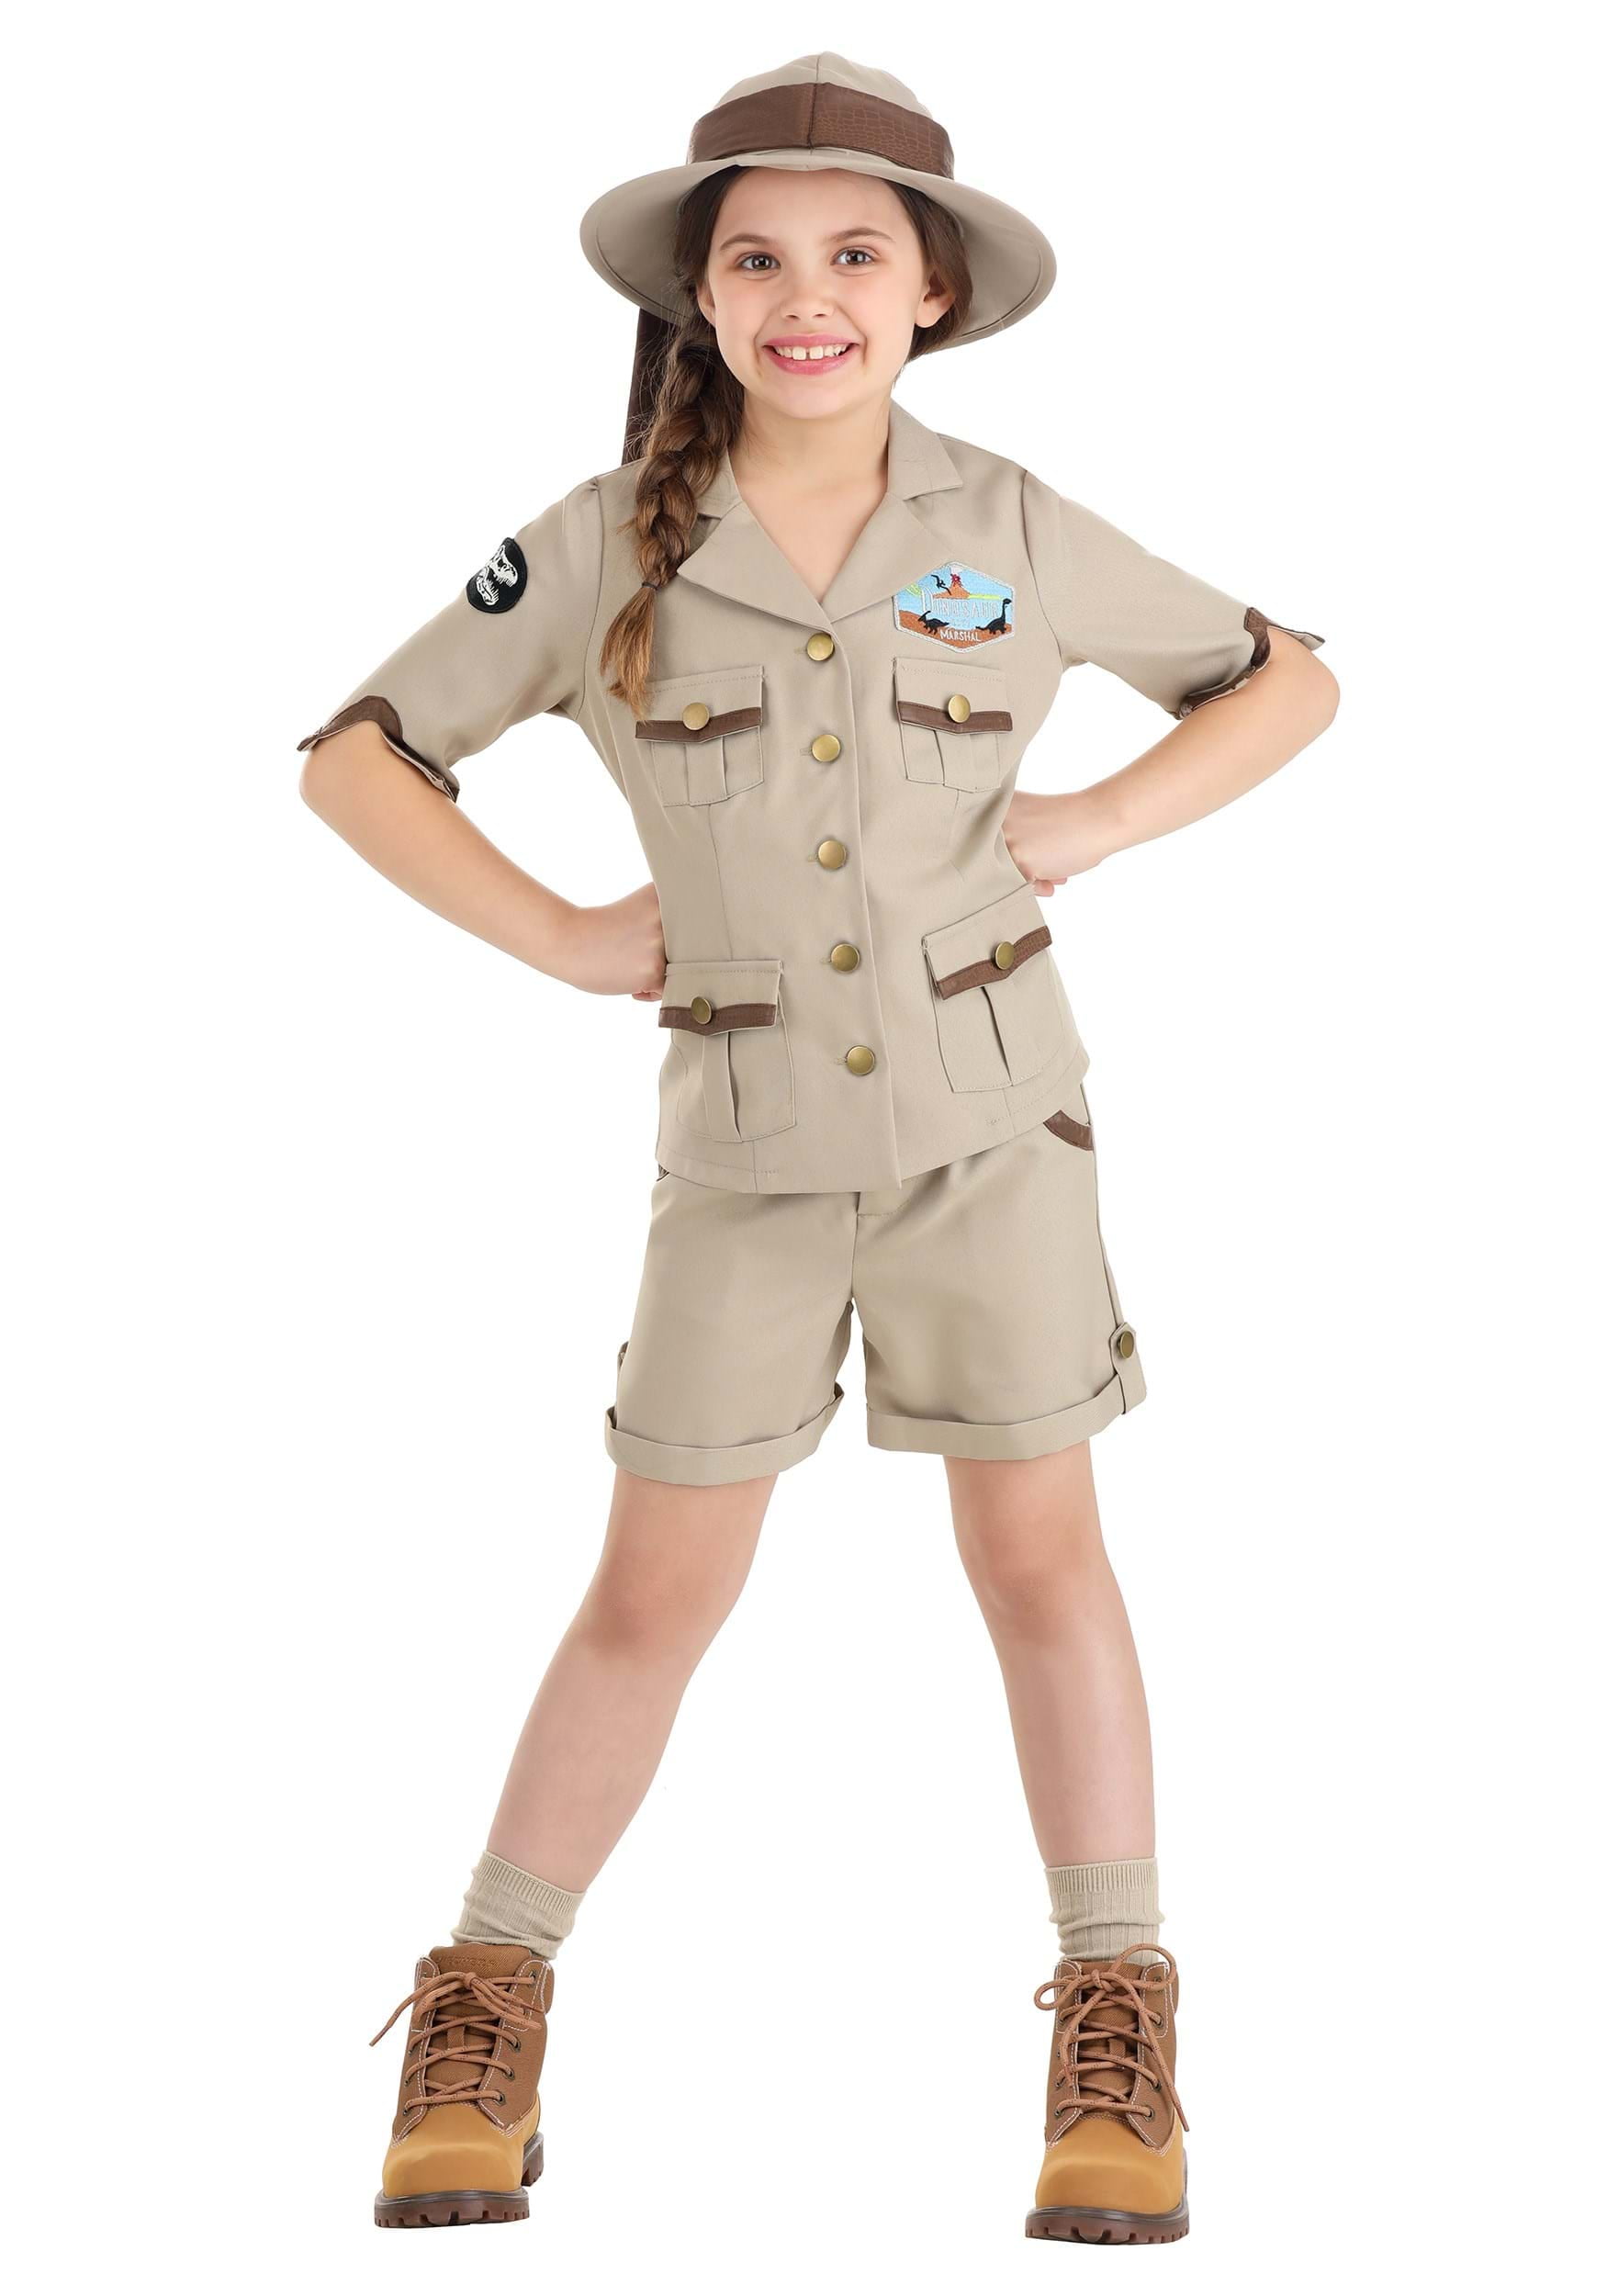 Paleontologist Costume for Kids - Walmart.com